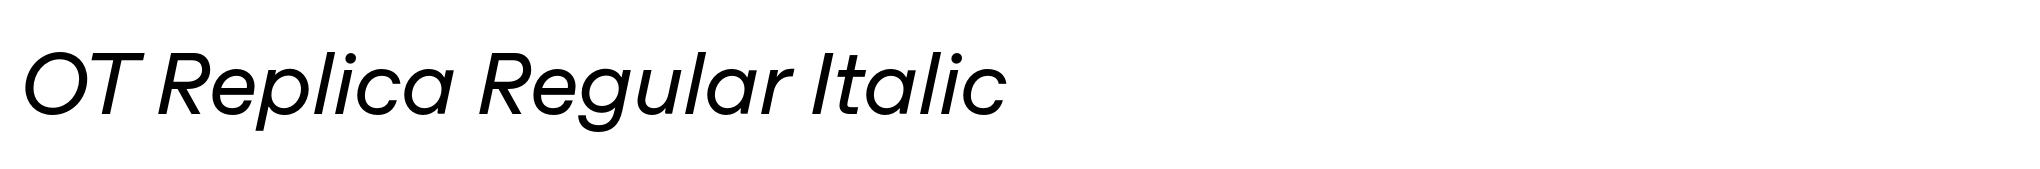 OT Replica Regular Italic image